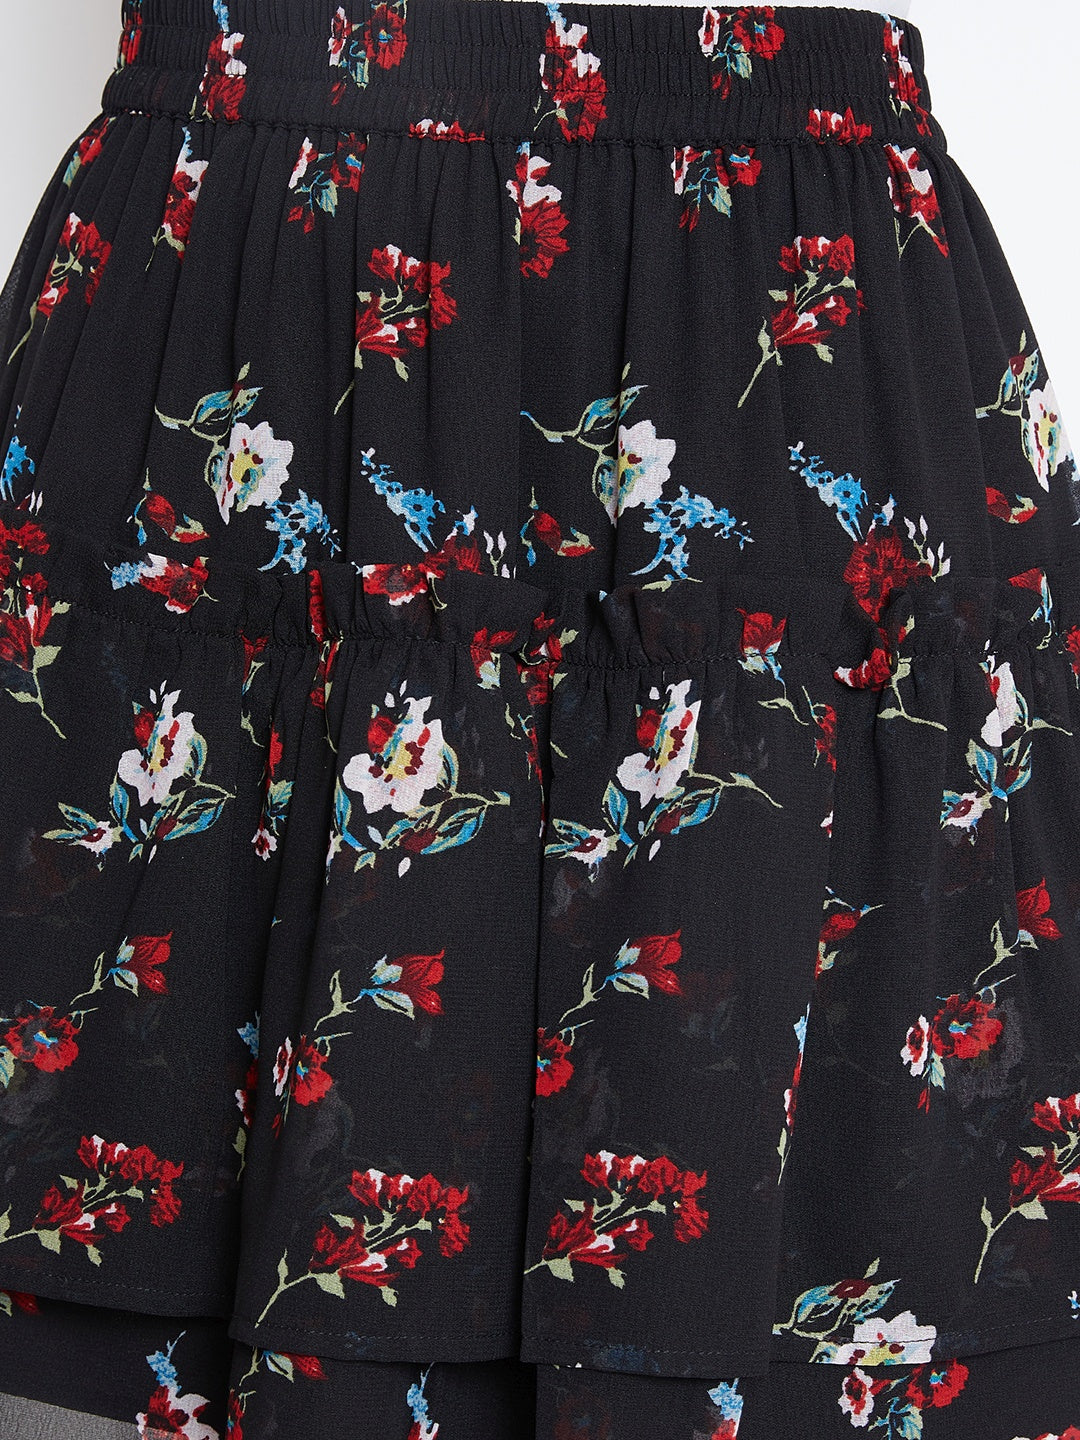 Berrylush Women Black & Red Floral Print Layered Slip-On Mini Skirt